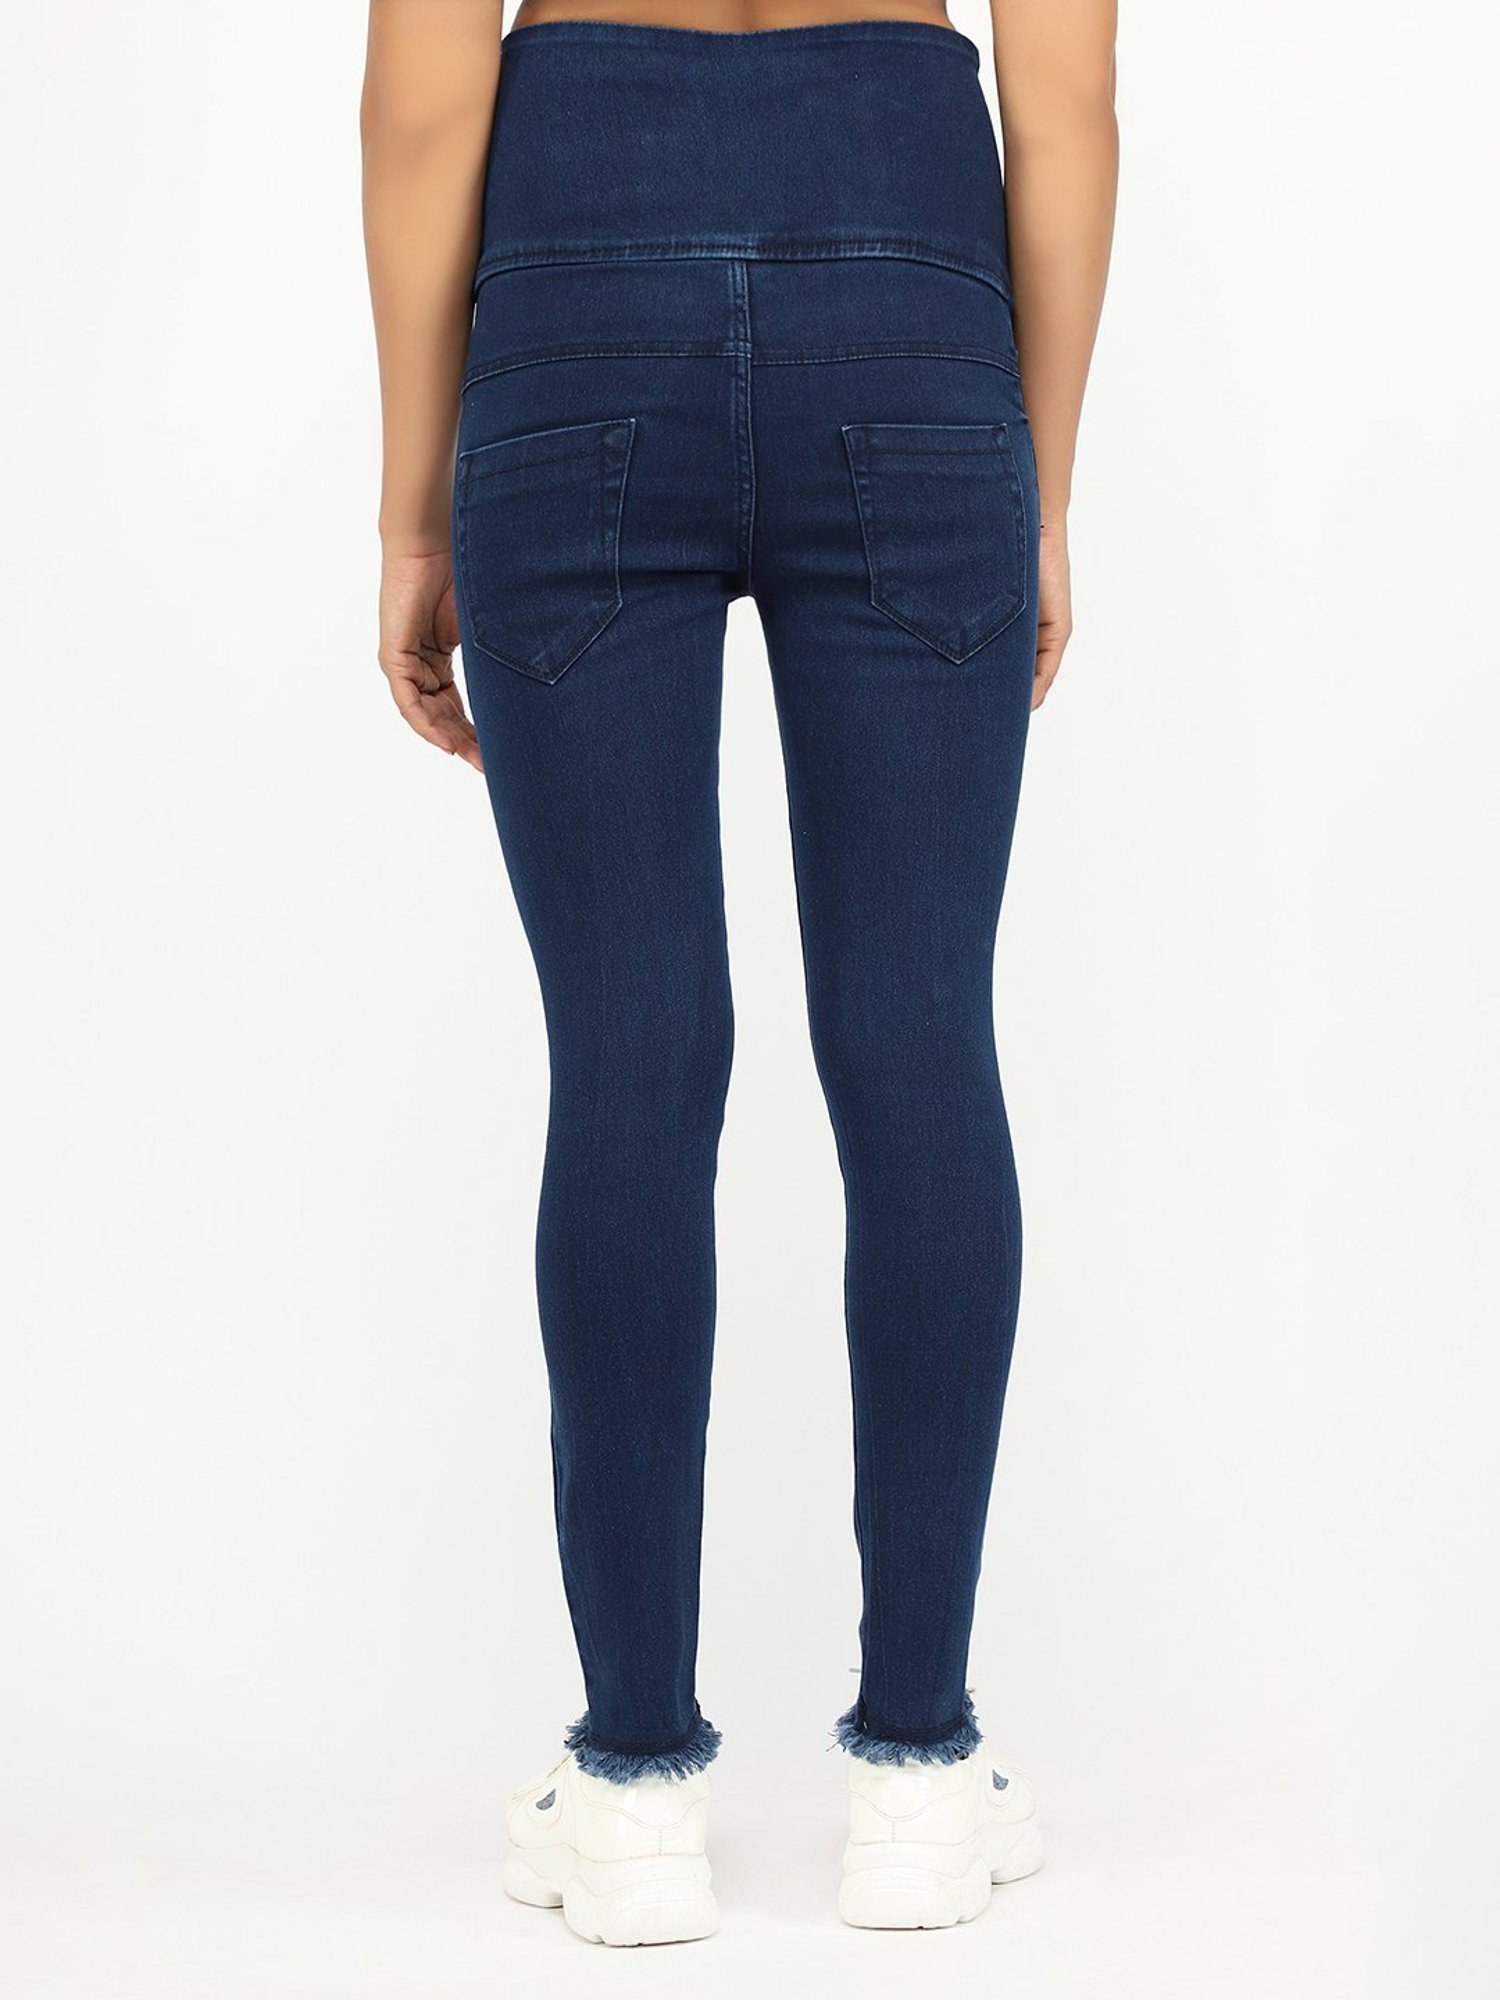 Super High Waisted Stretchy Skinny Jeans - Navy Blue Denim – SohoGirl.com